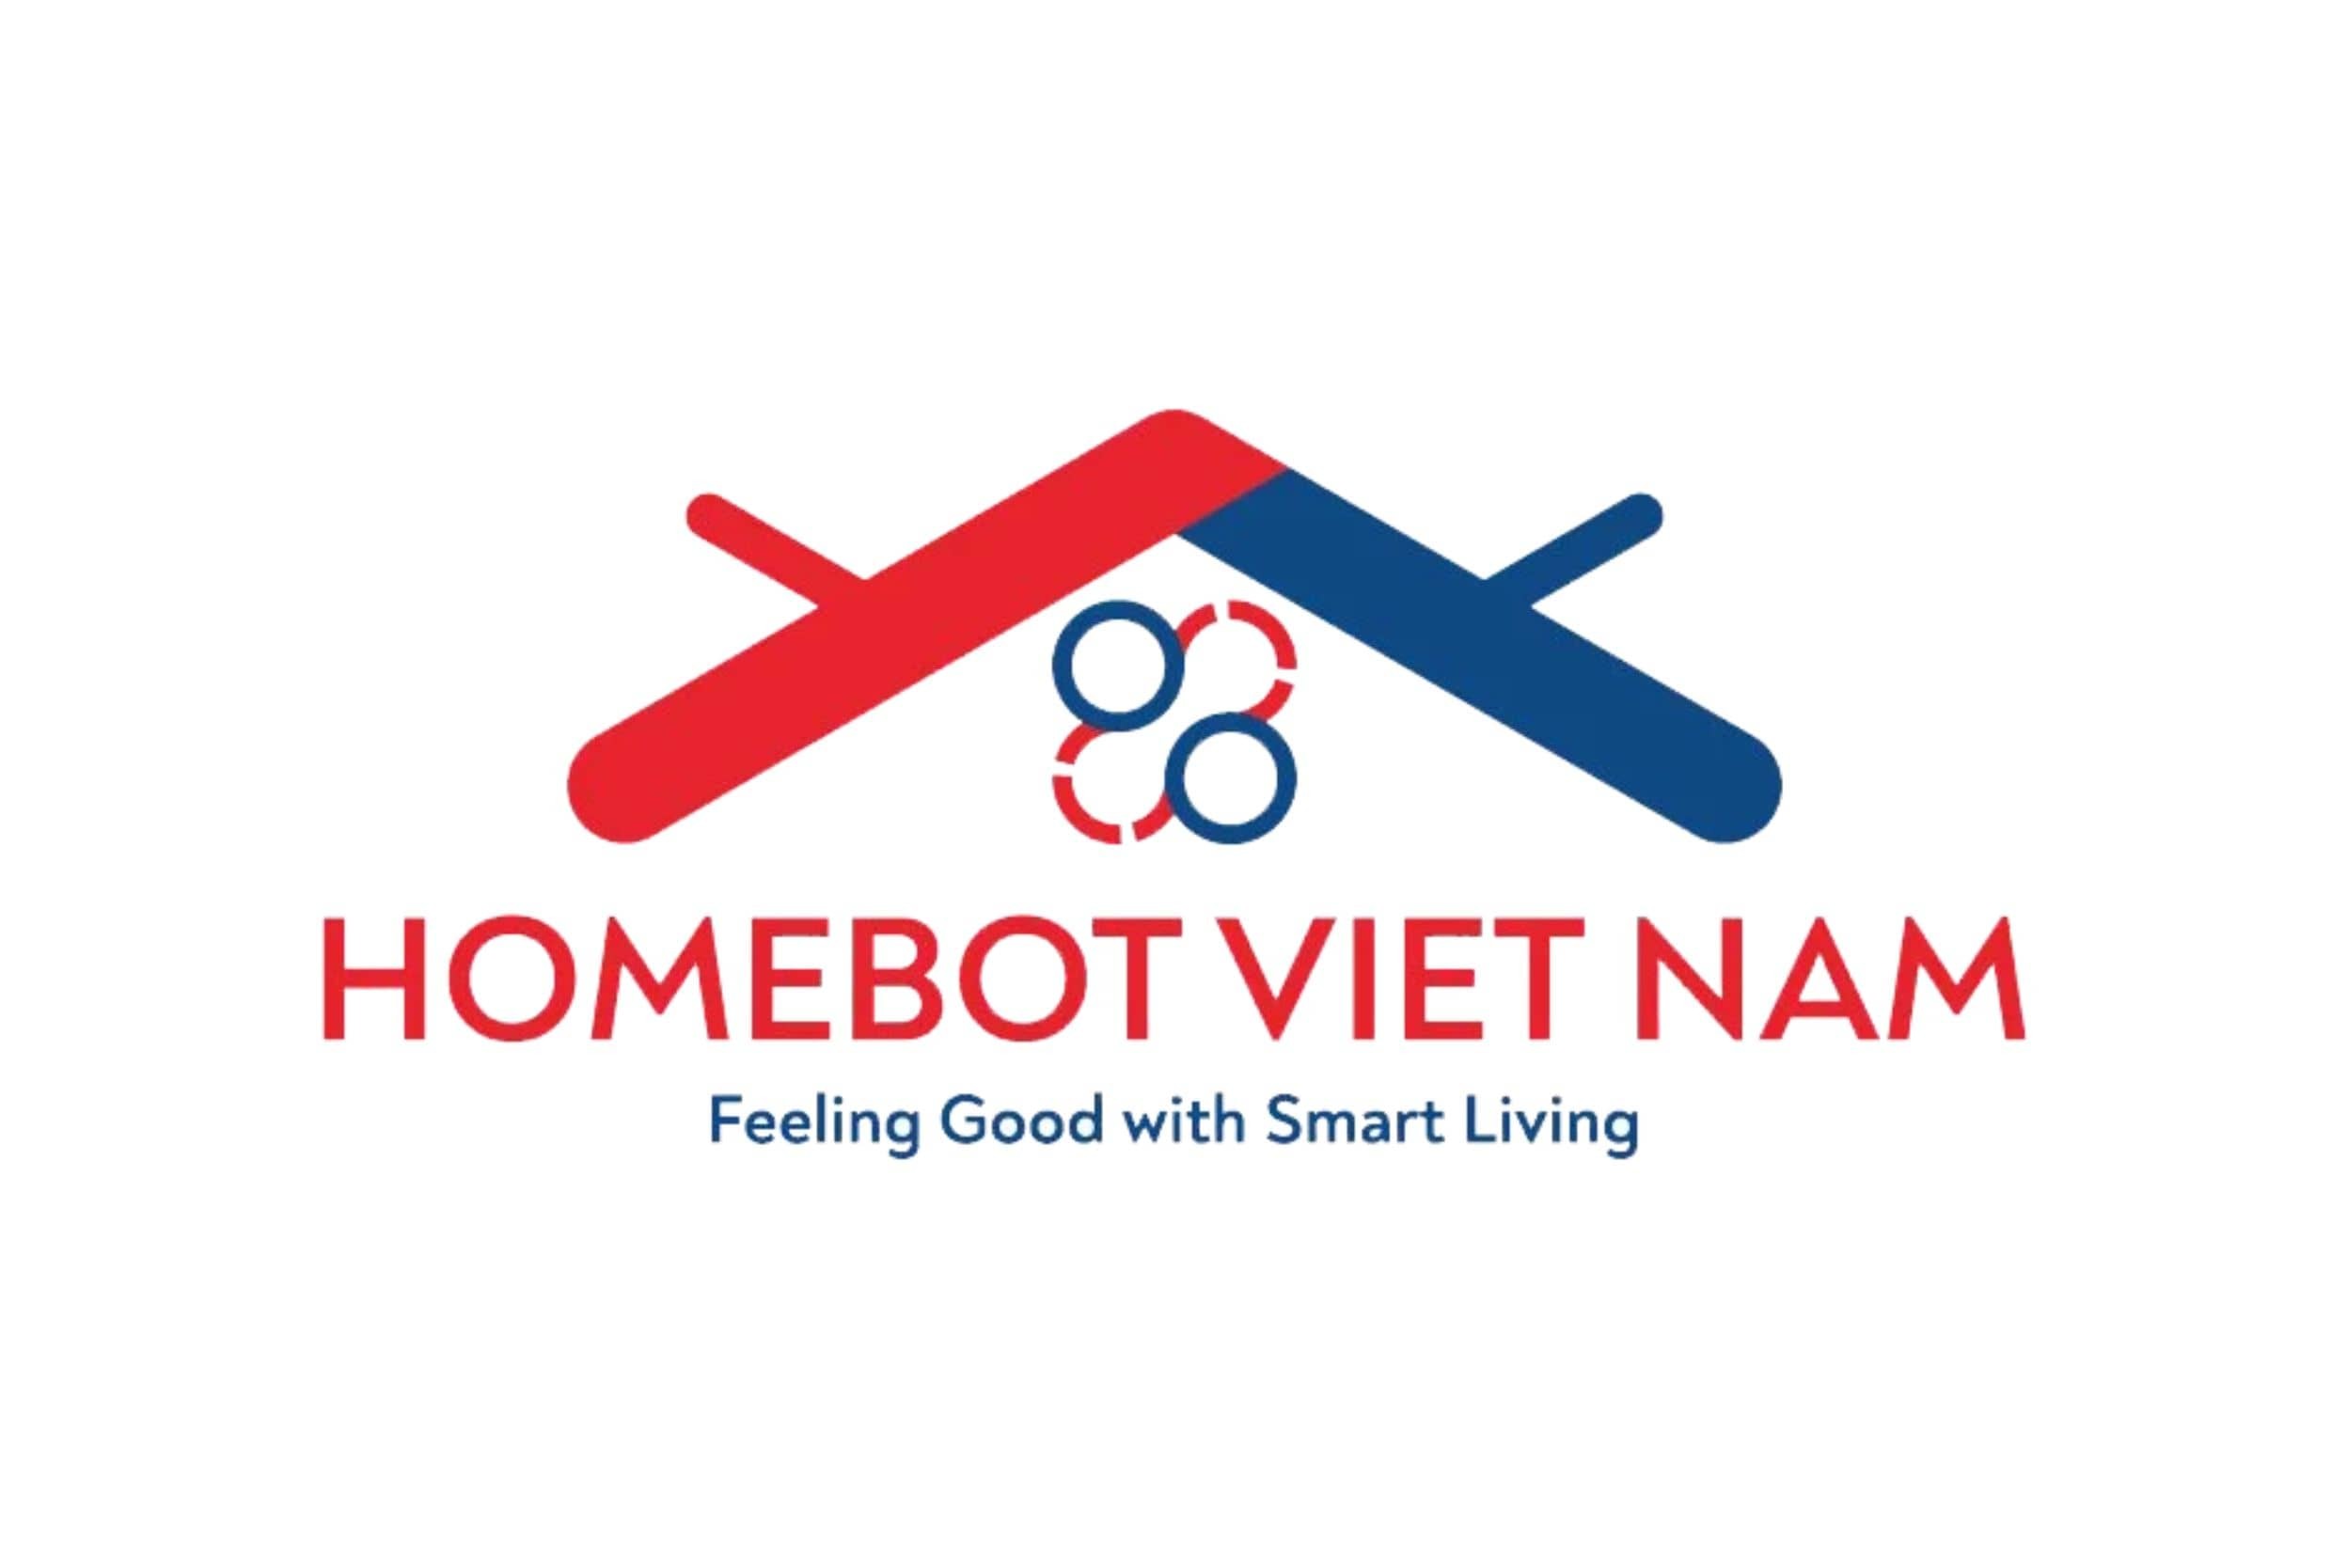 homebot-viet-nam-logo